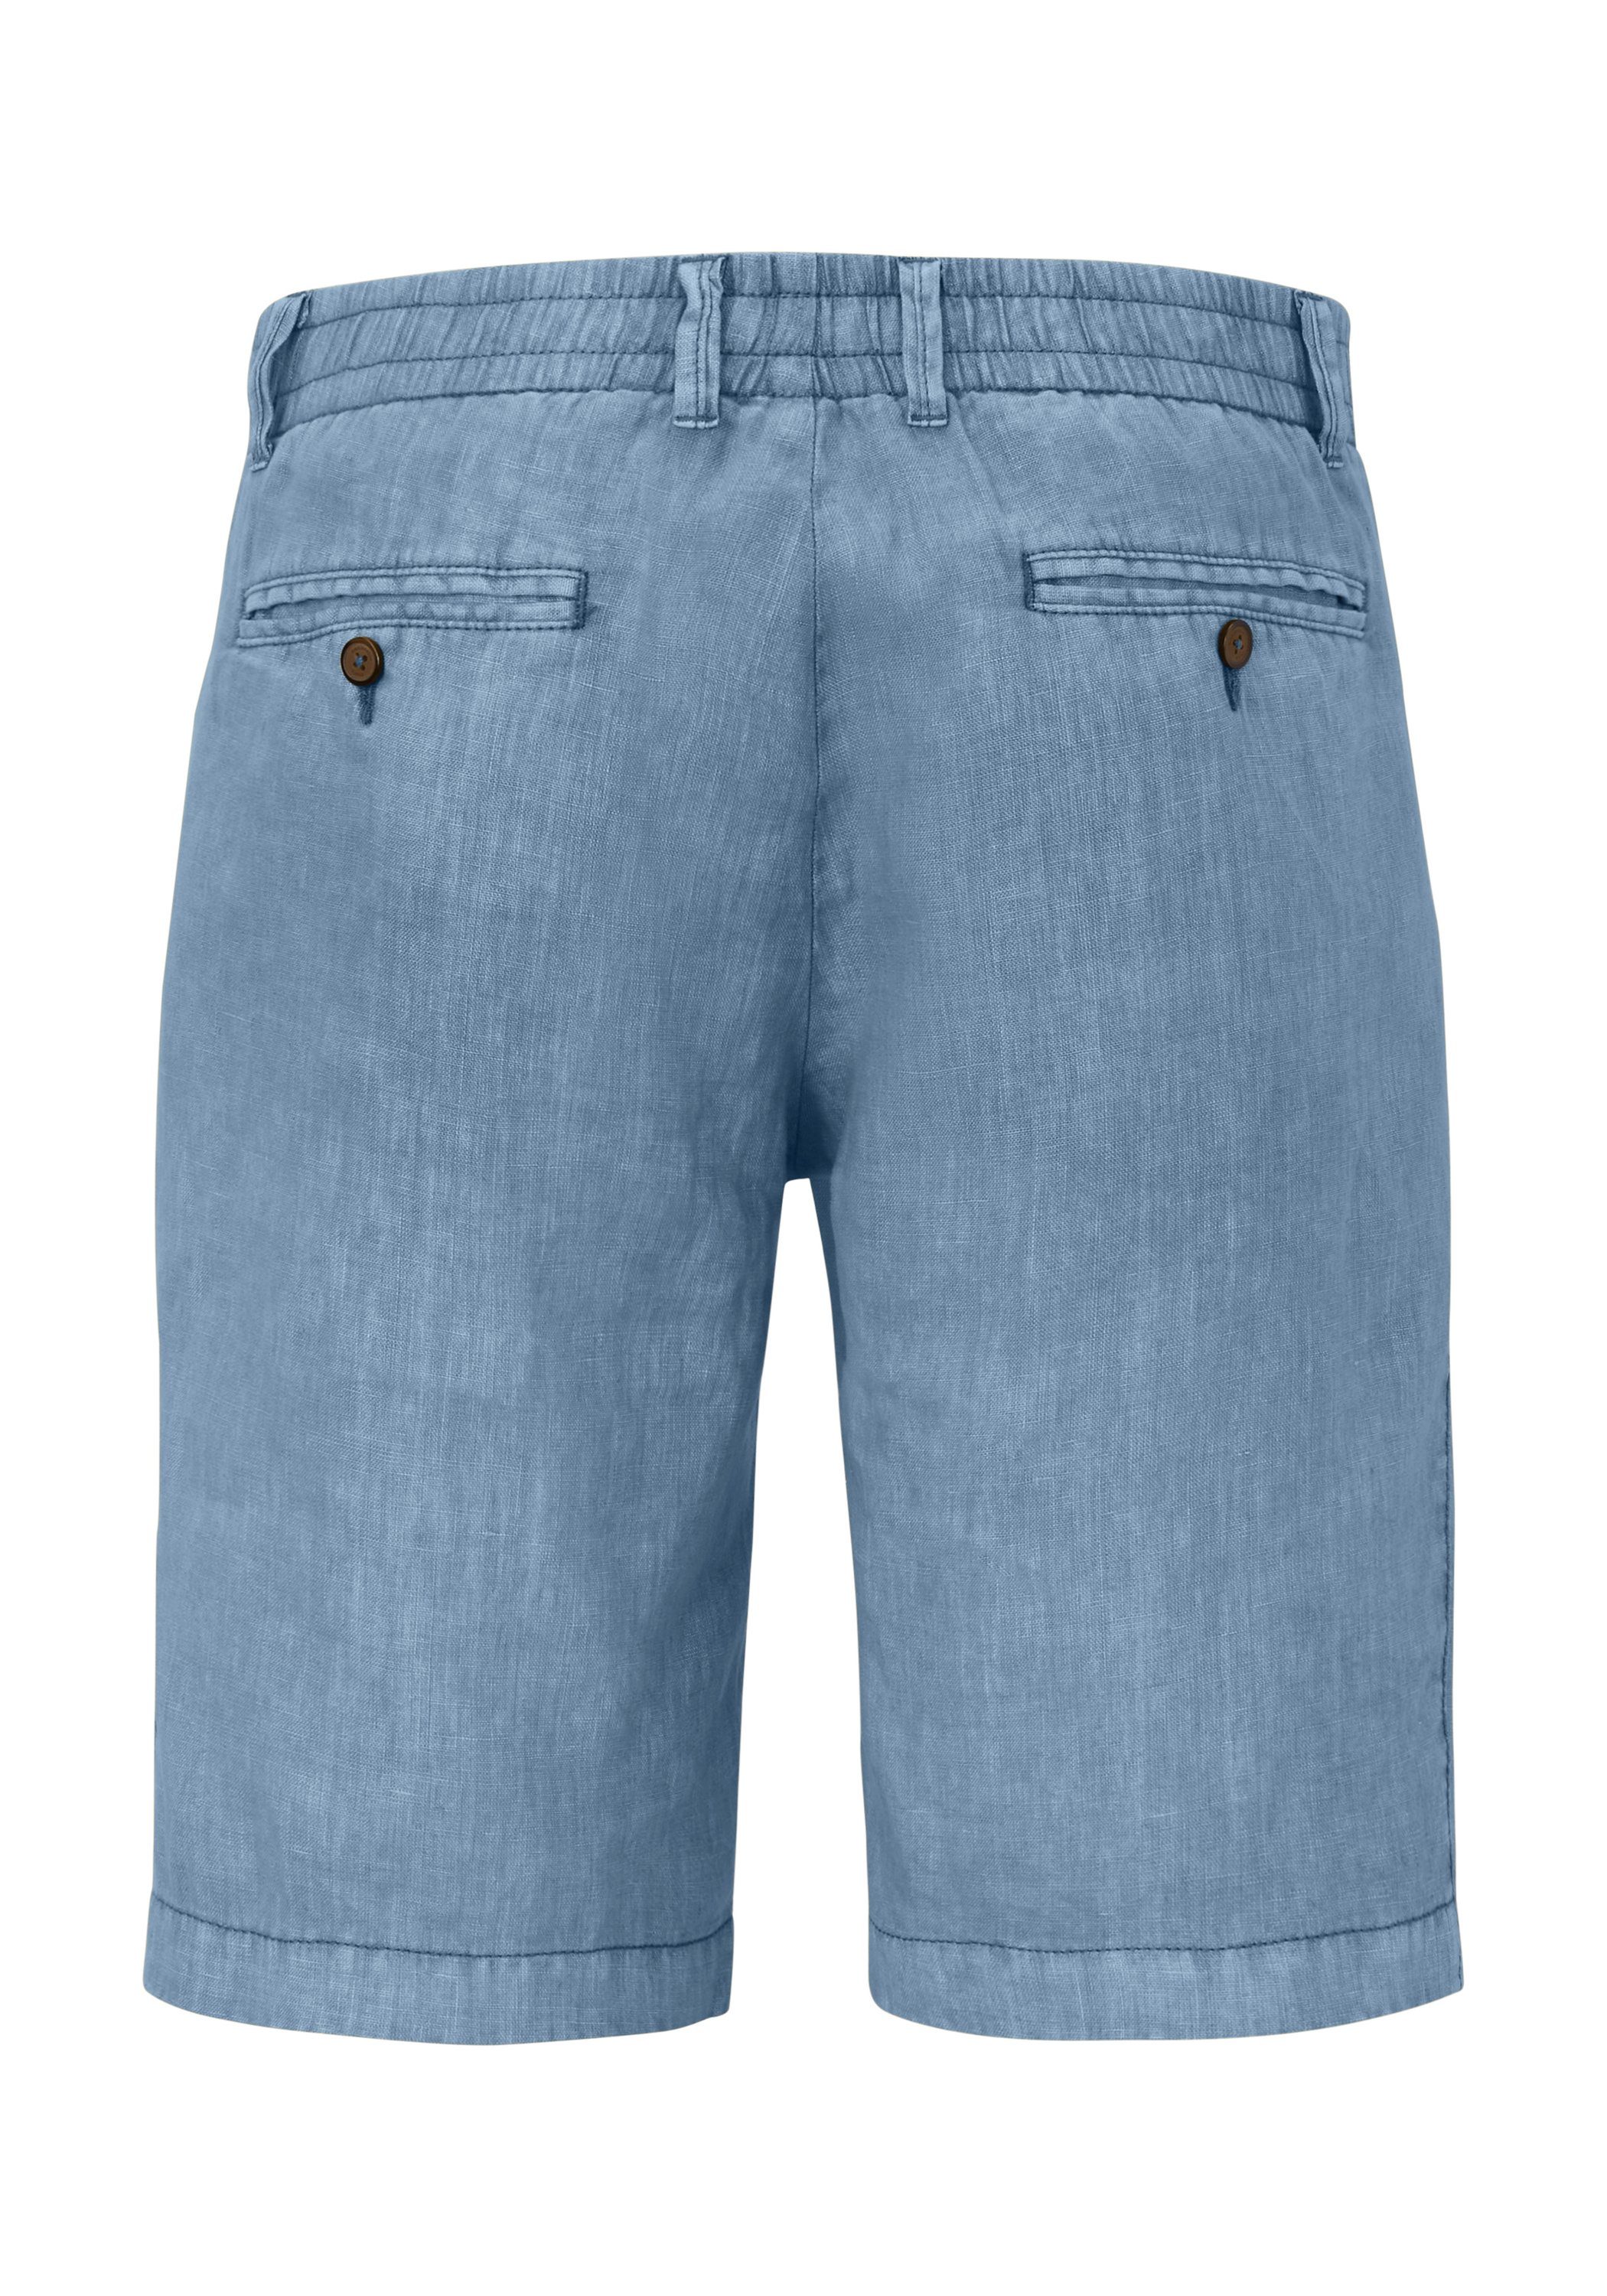 MAUI panoramic aus Fit Leinen blue Bermudas Shorts 2 Jackets Modern Leichte S4